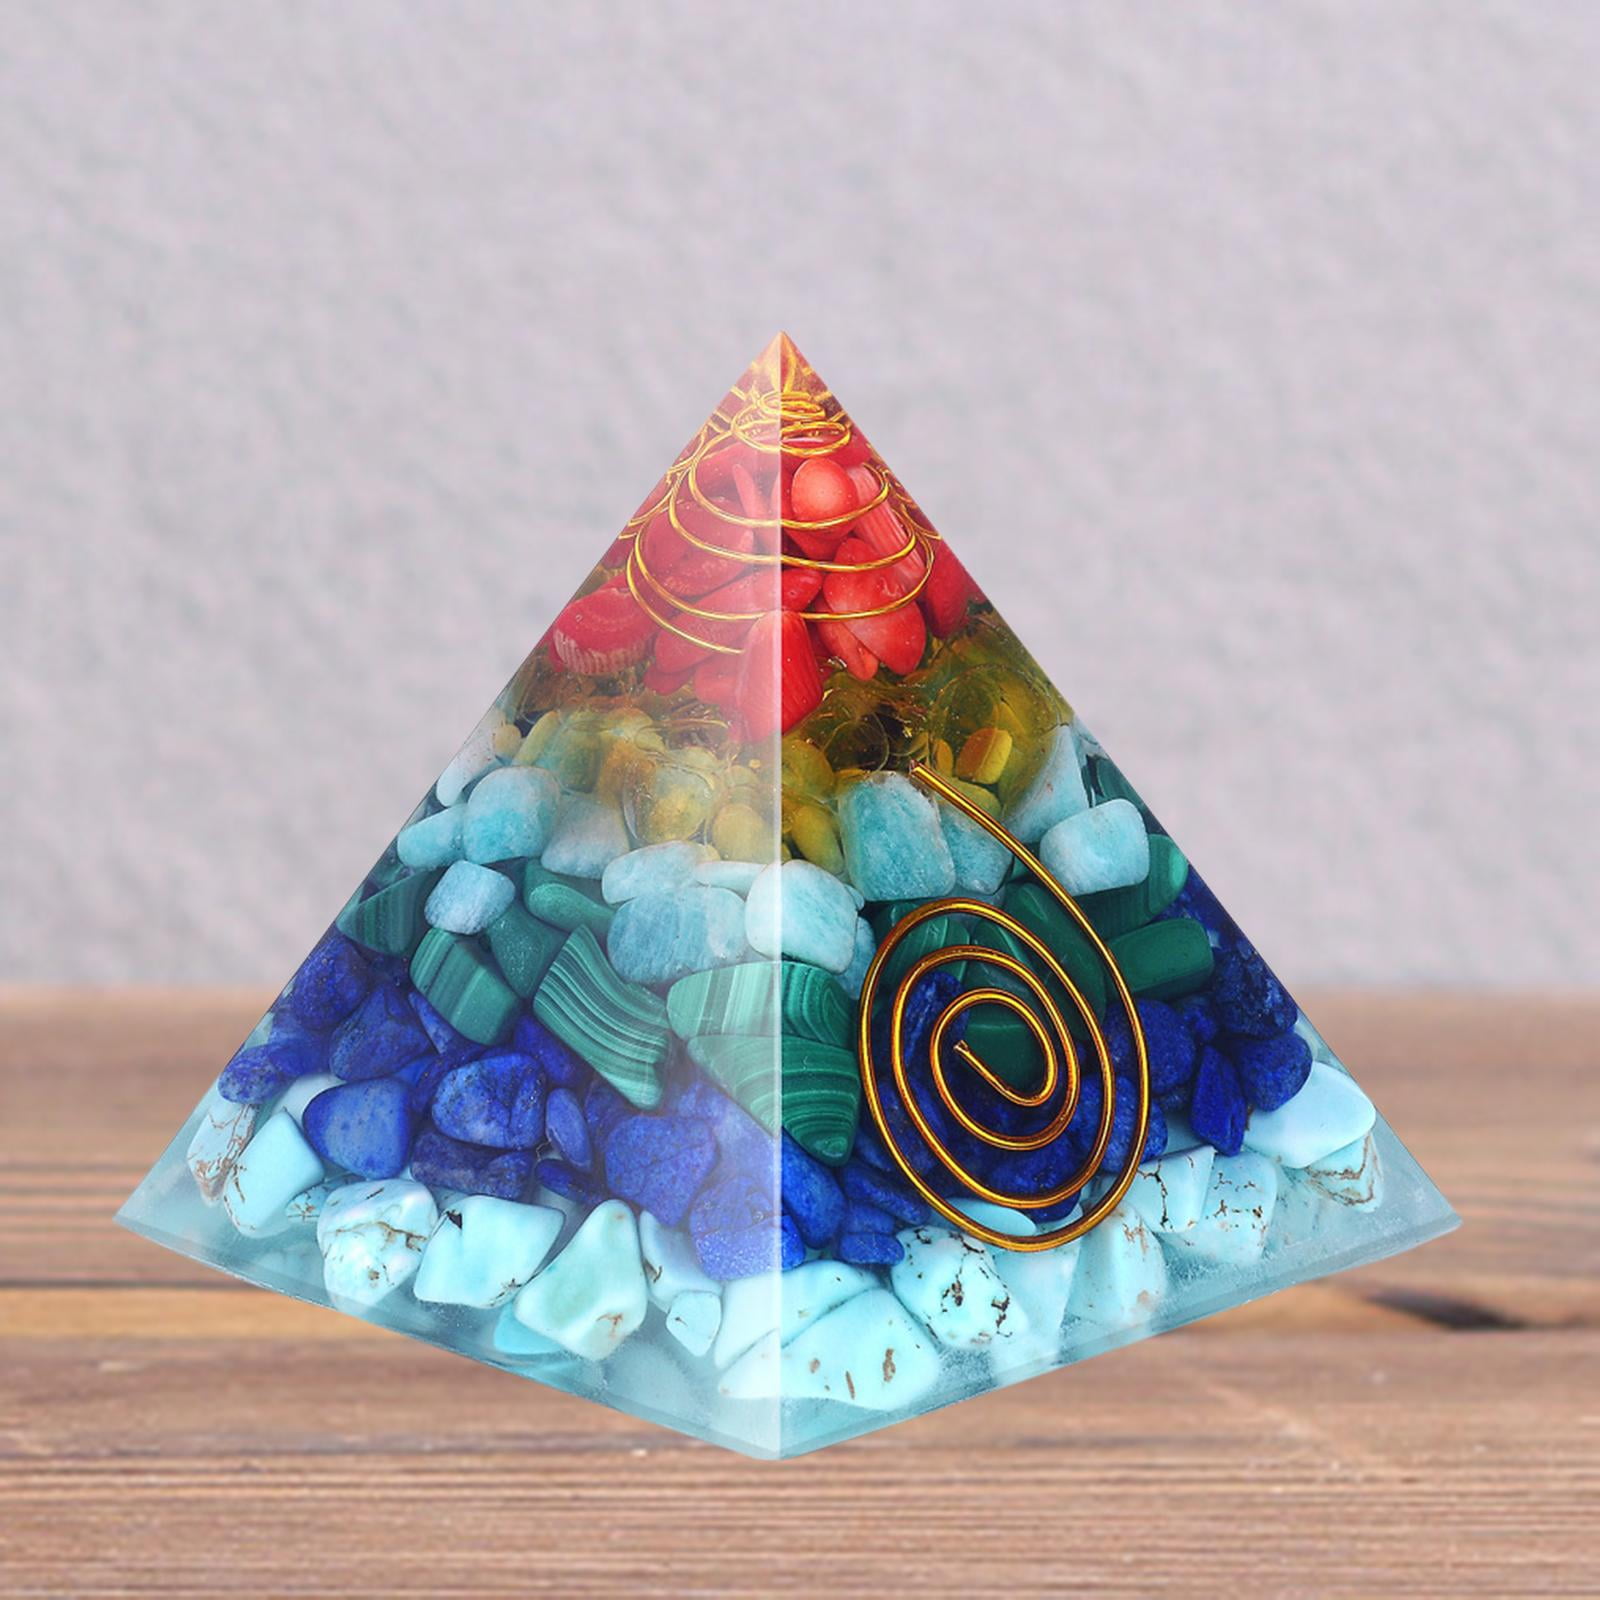 Vtg Rare Pink Blush Crystal Glass Pyramid Cabochons Figures Crafts Home Decor 